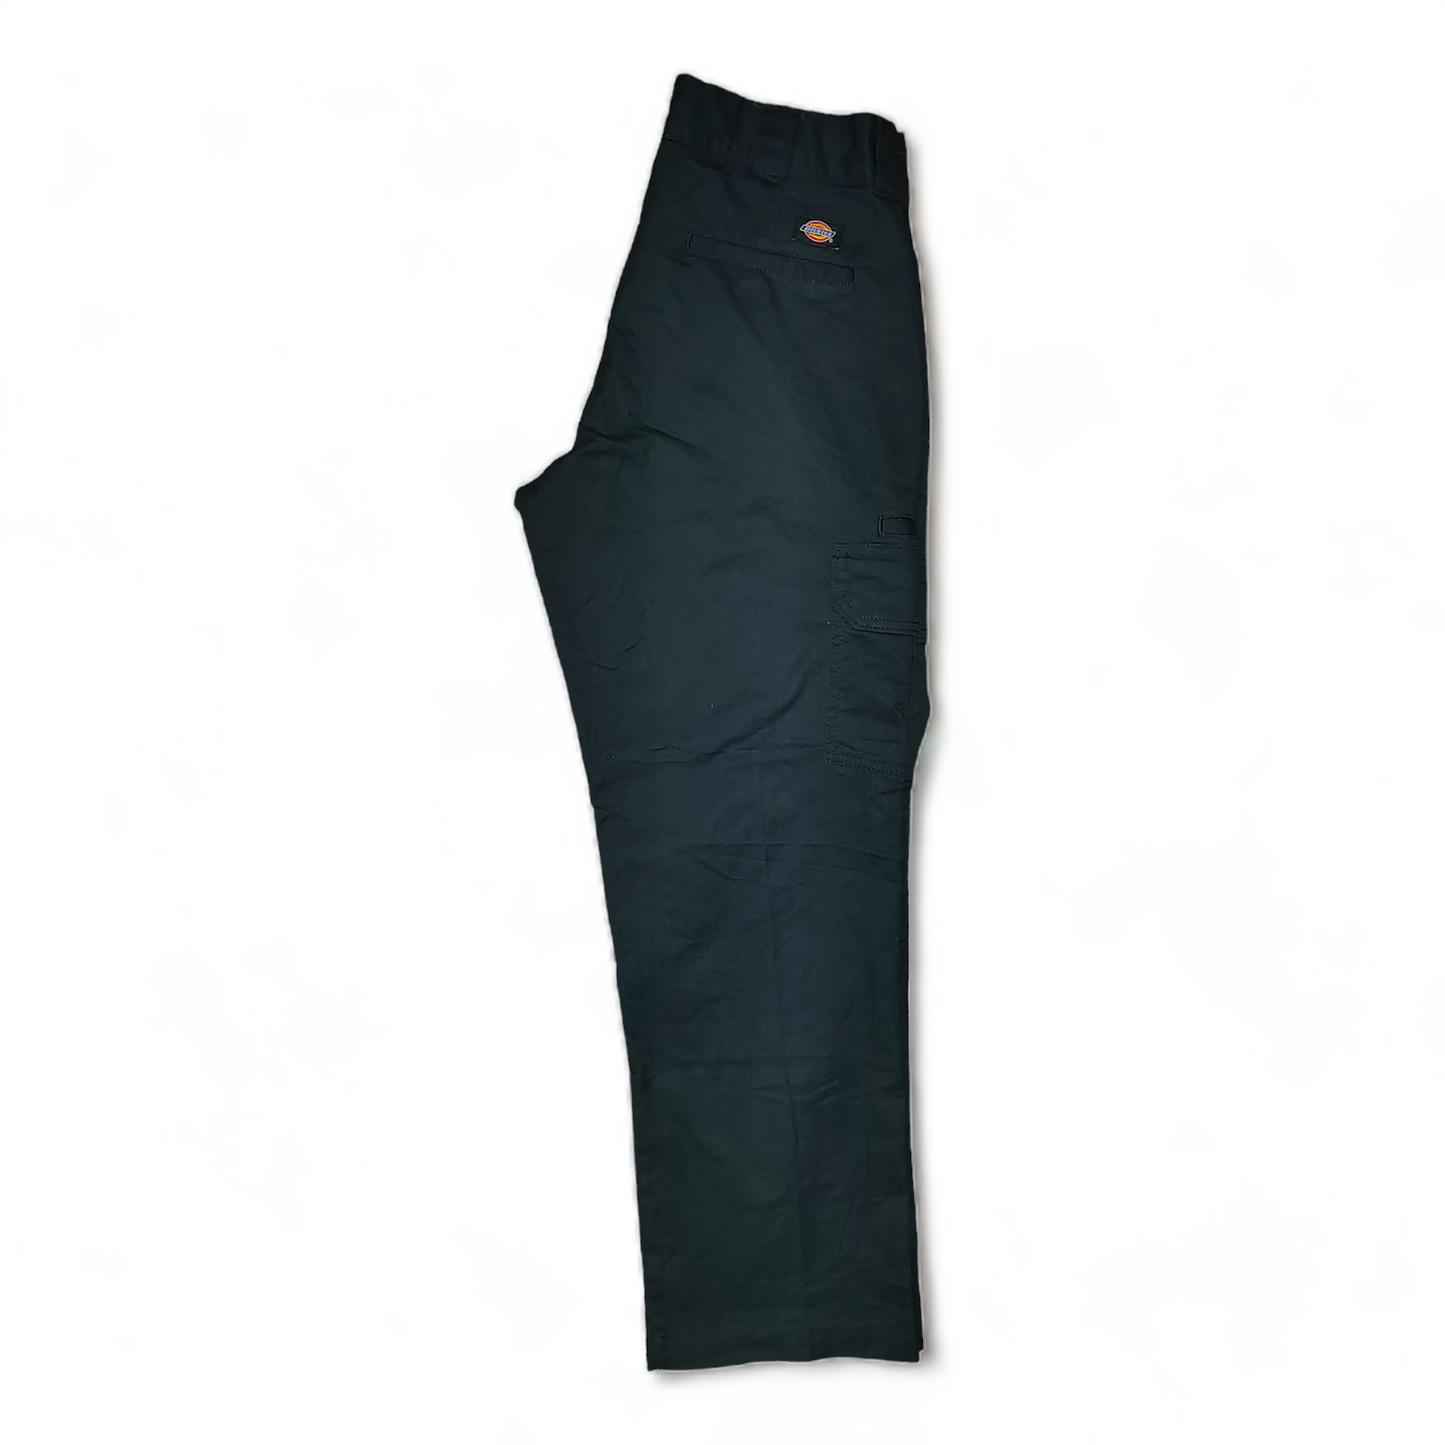 Dickies Trousers Mens W35 Black – 35 x 30 – Regular Straight